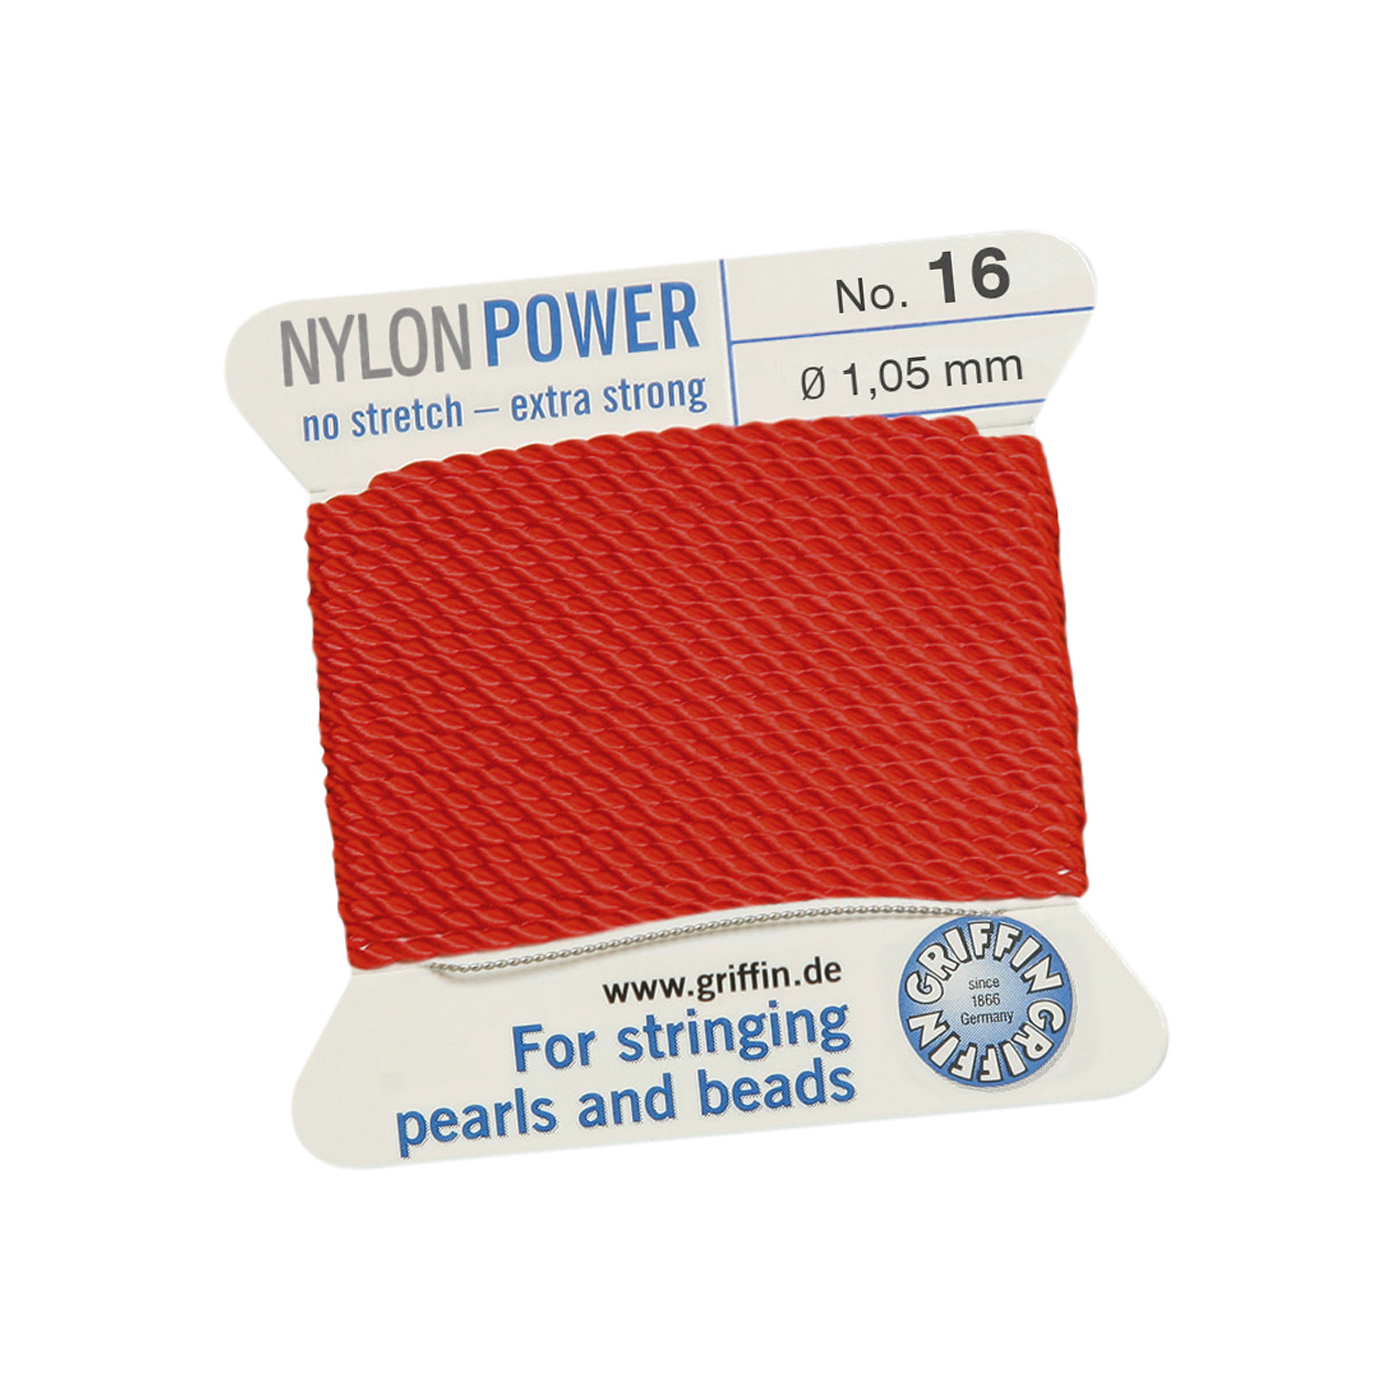 Bead Cord NylonPower, Red, No. 16 - 2 m